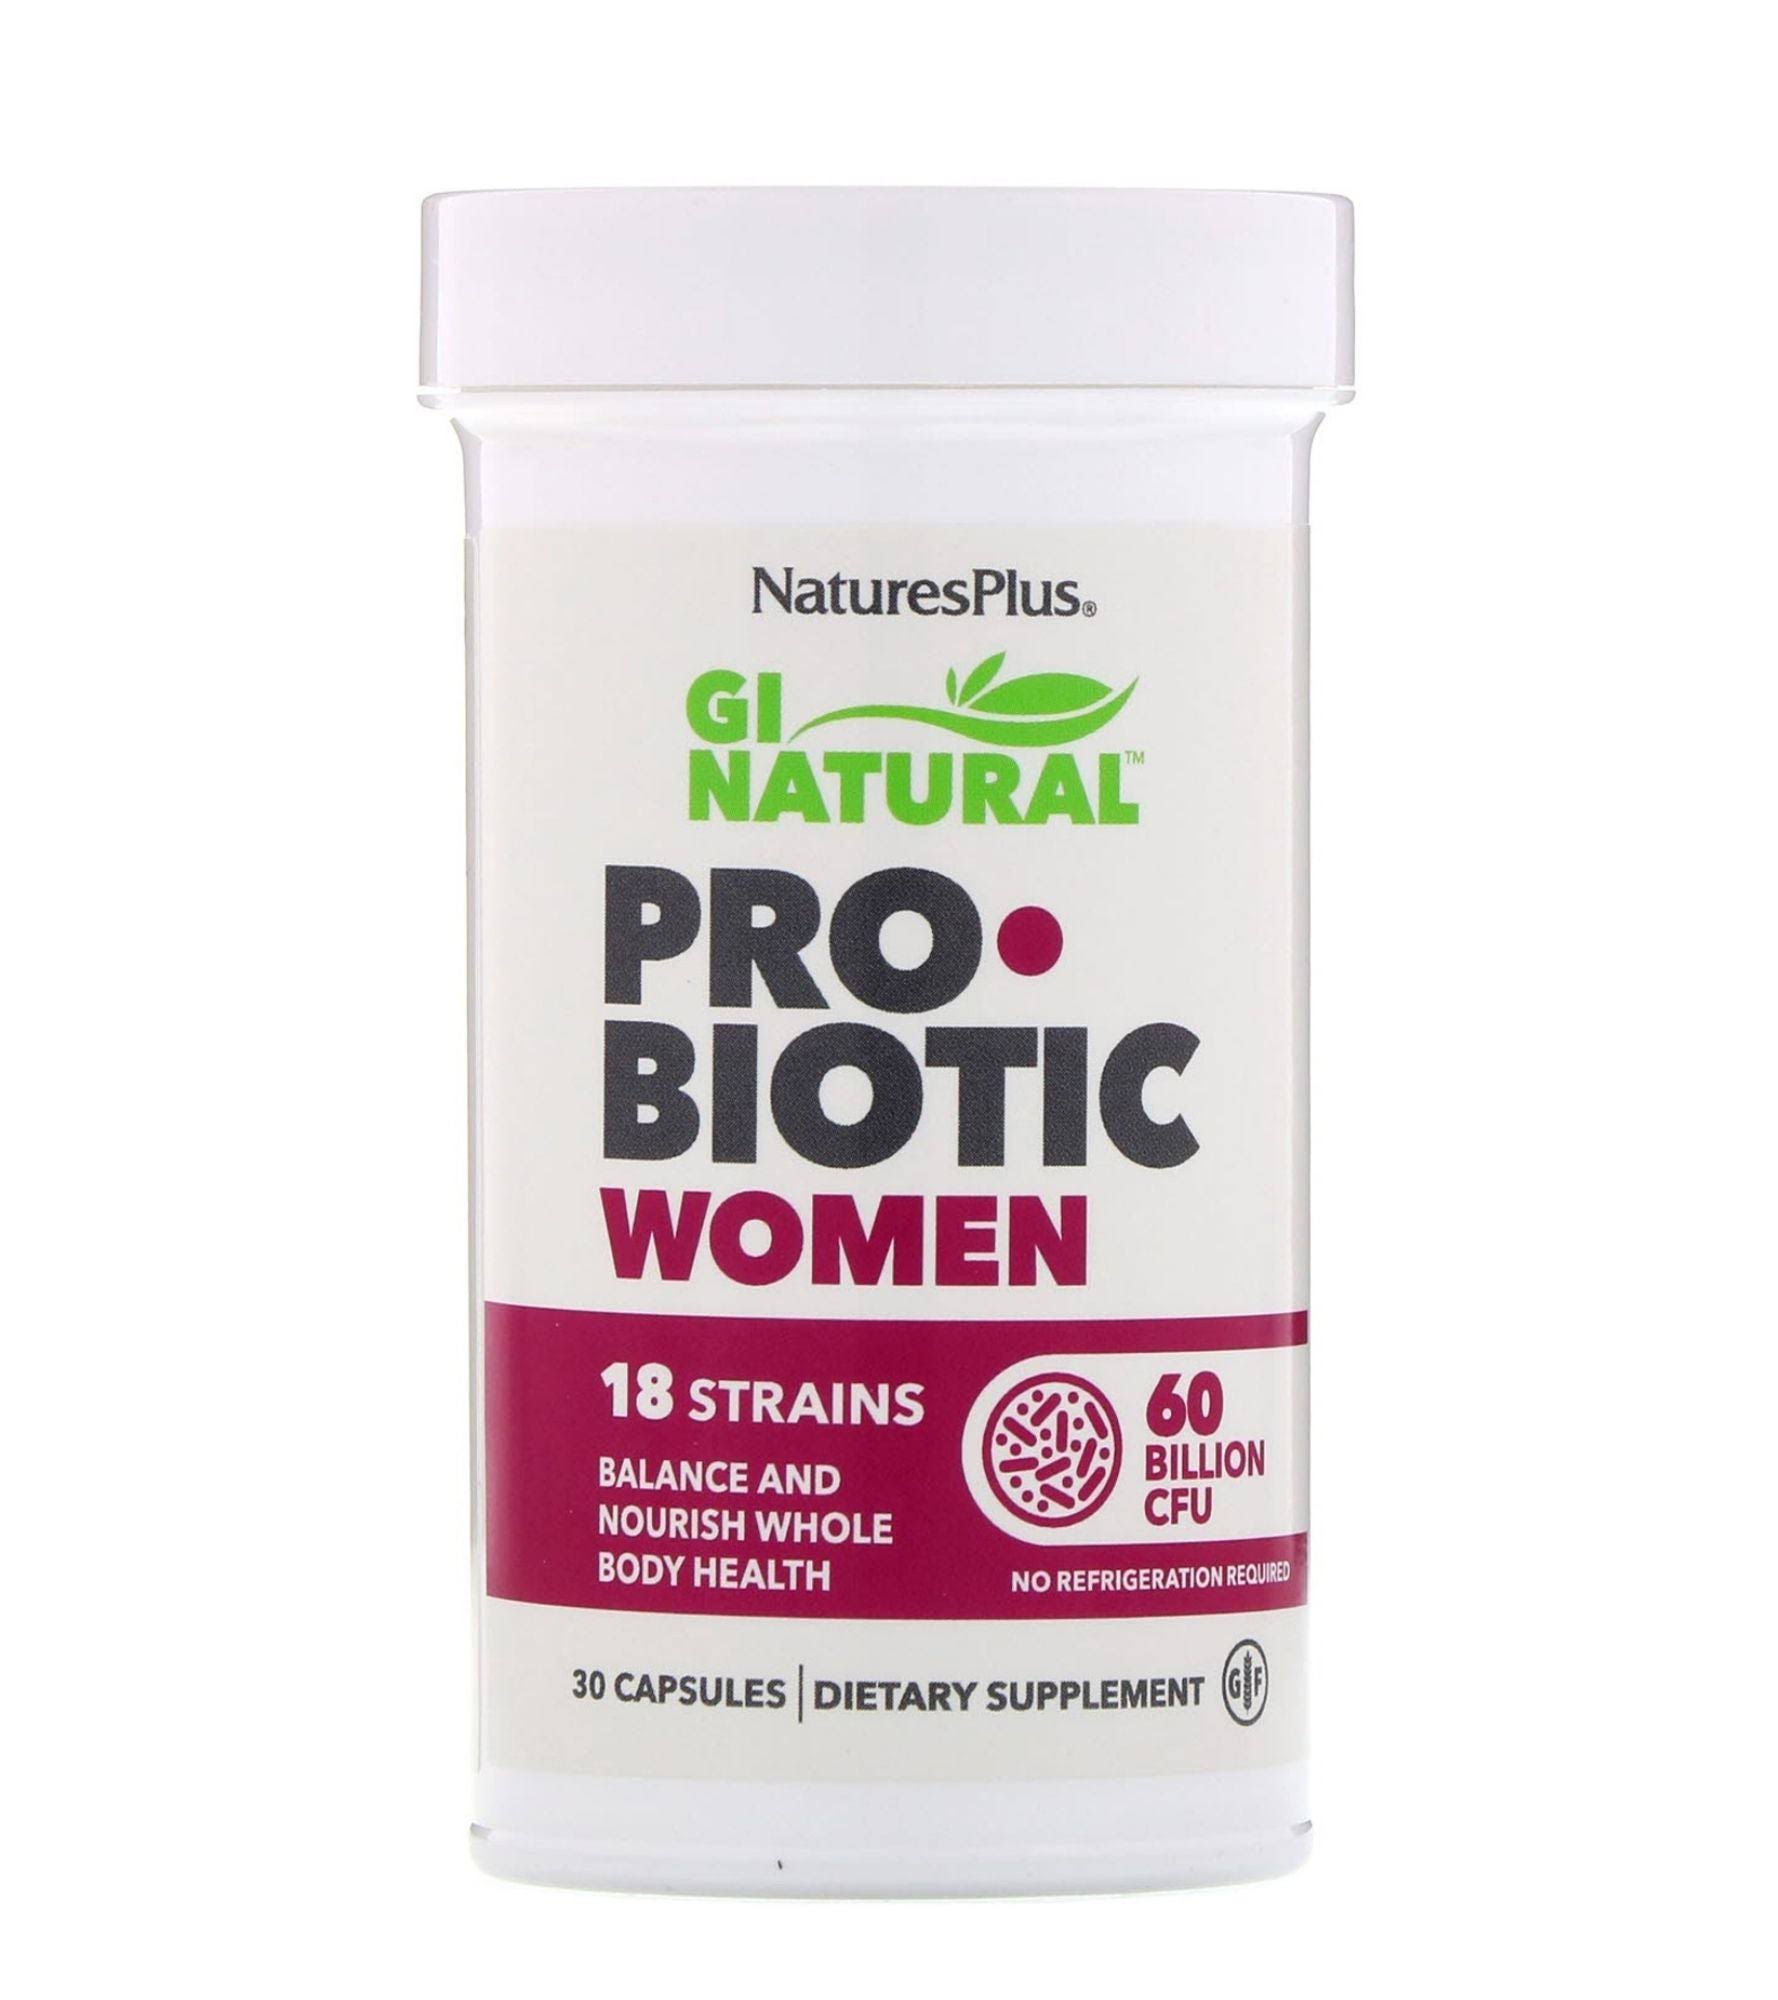 Nature's Plus - Gi Natural Probiotic Women - 30 Capsules